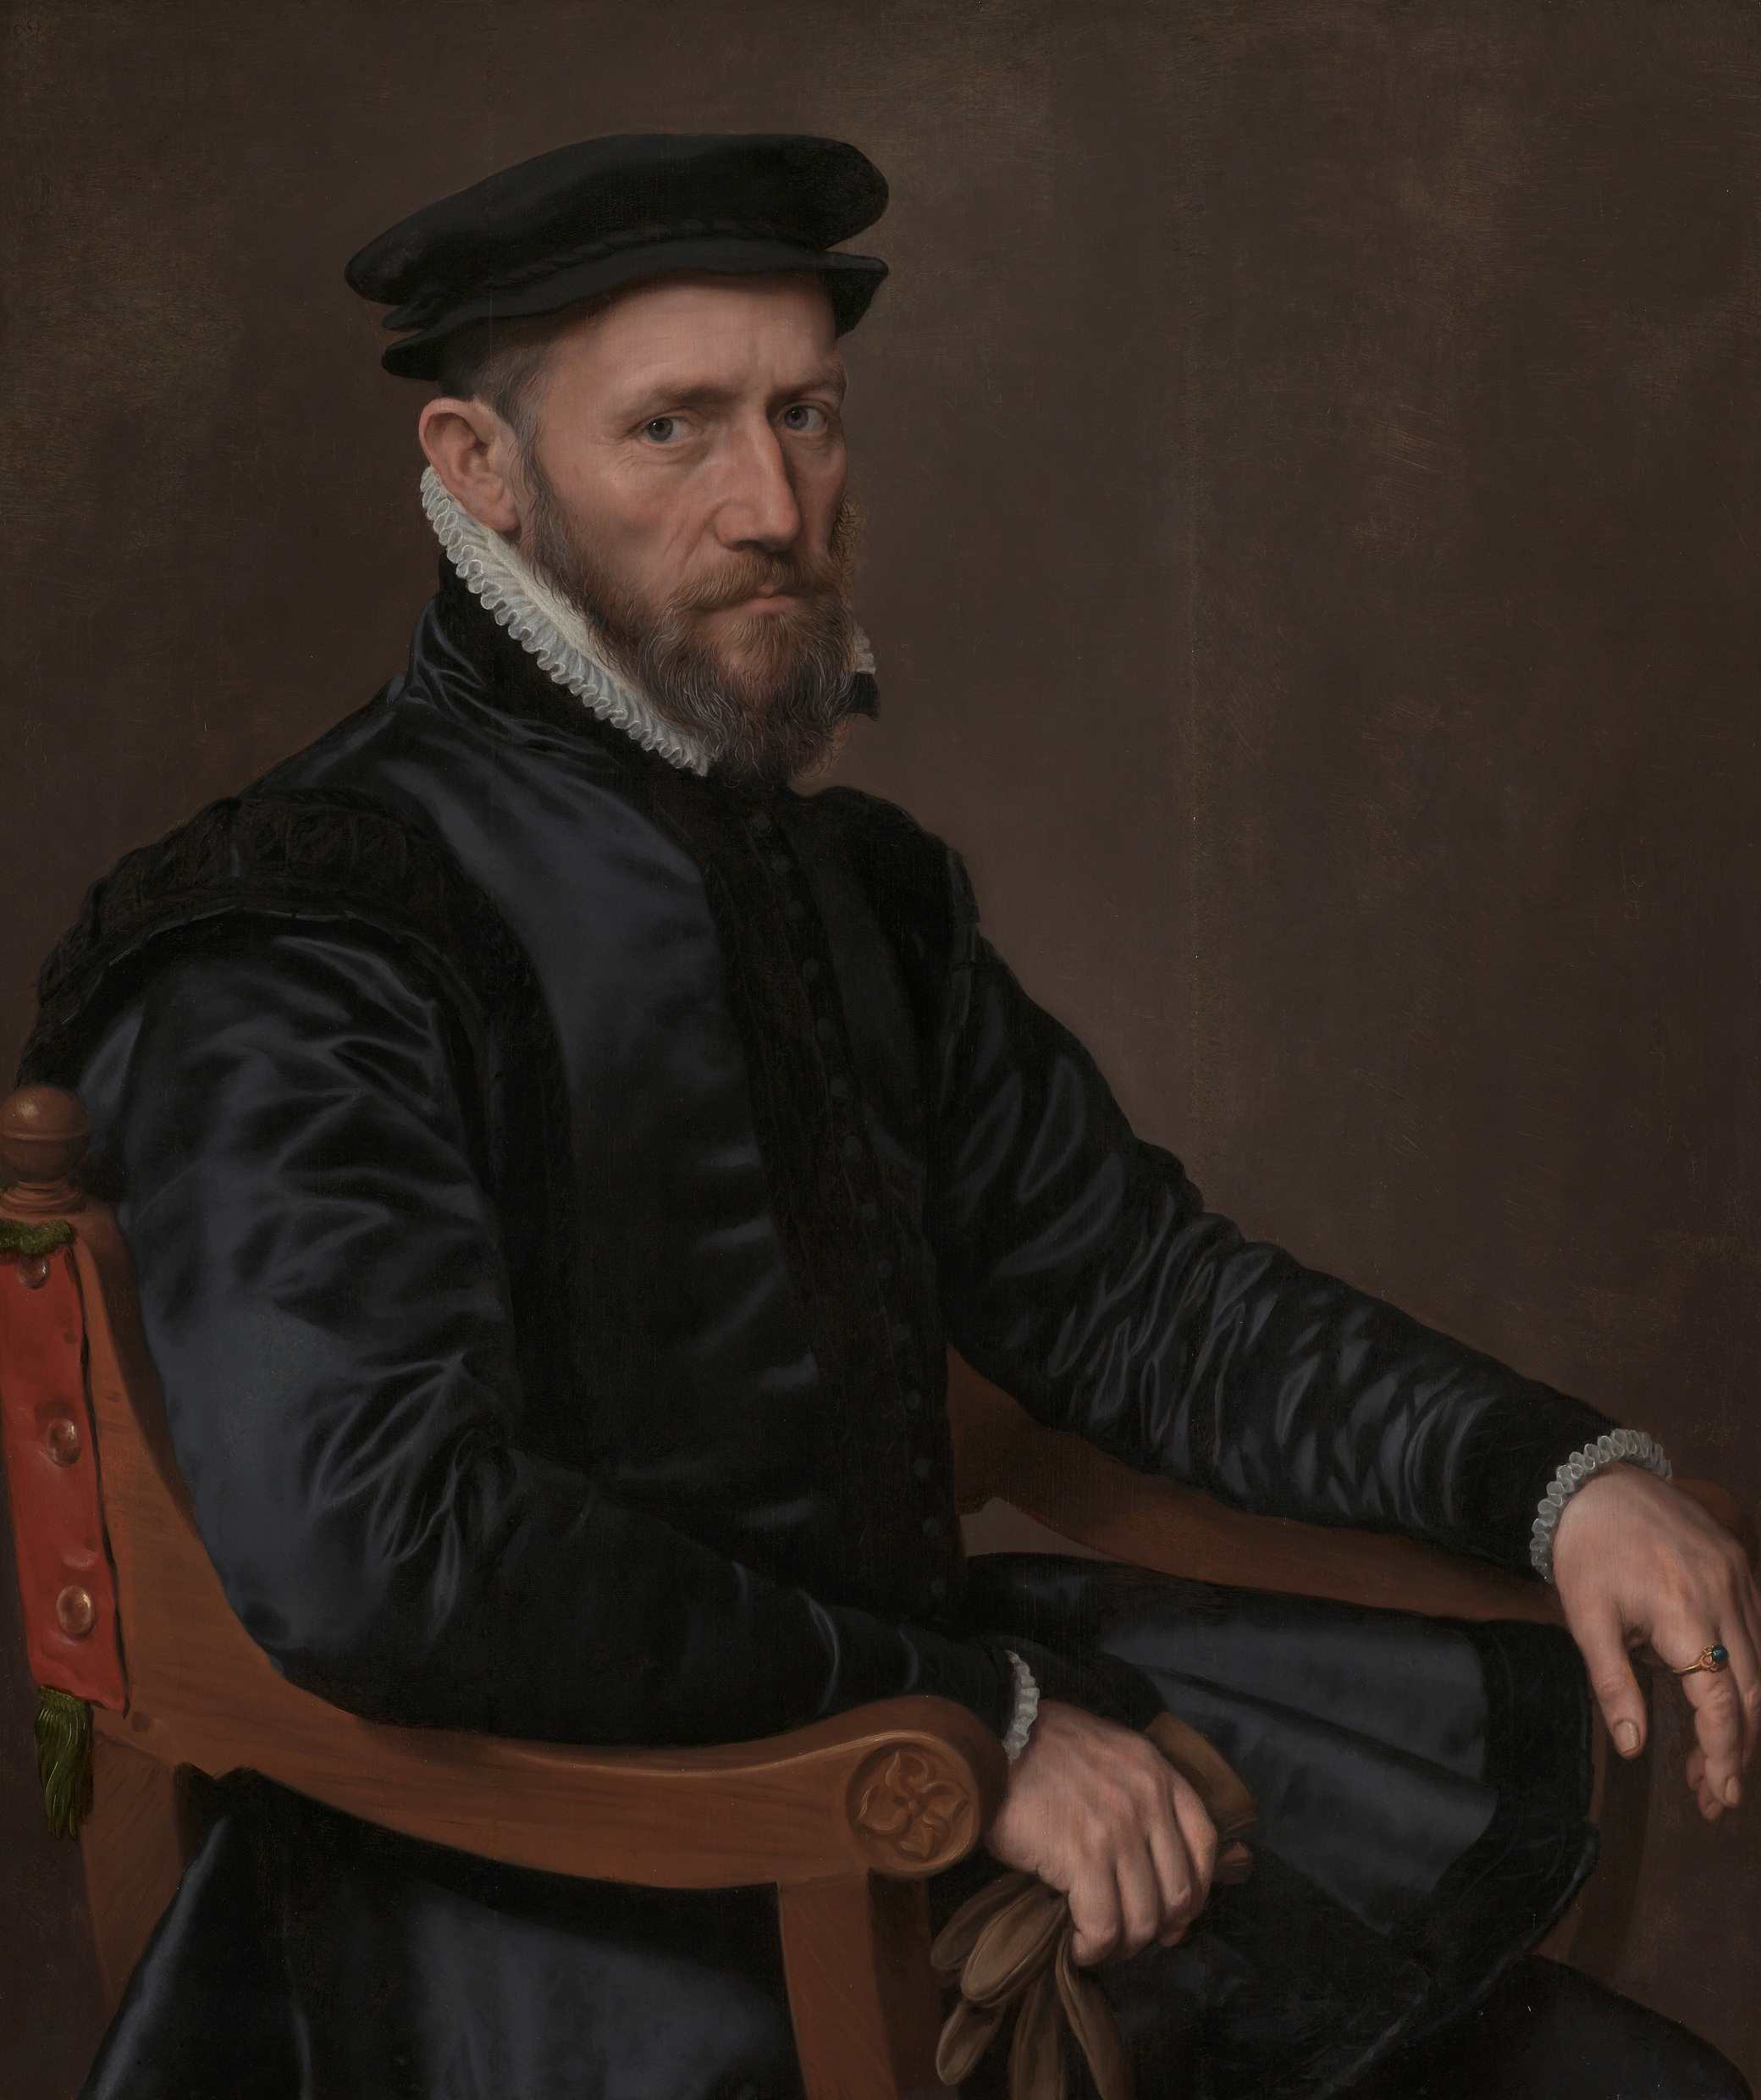 Antonio Moro, "Portrait de Sir Thomas Gresham", vers 1560-1565, Amsterdam, Rijksmuseum (source : Wikipedia).